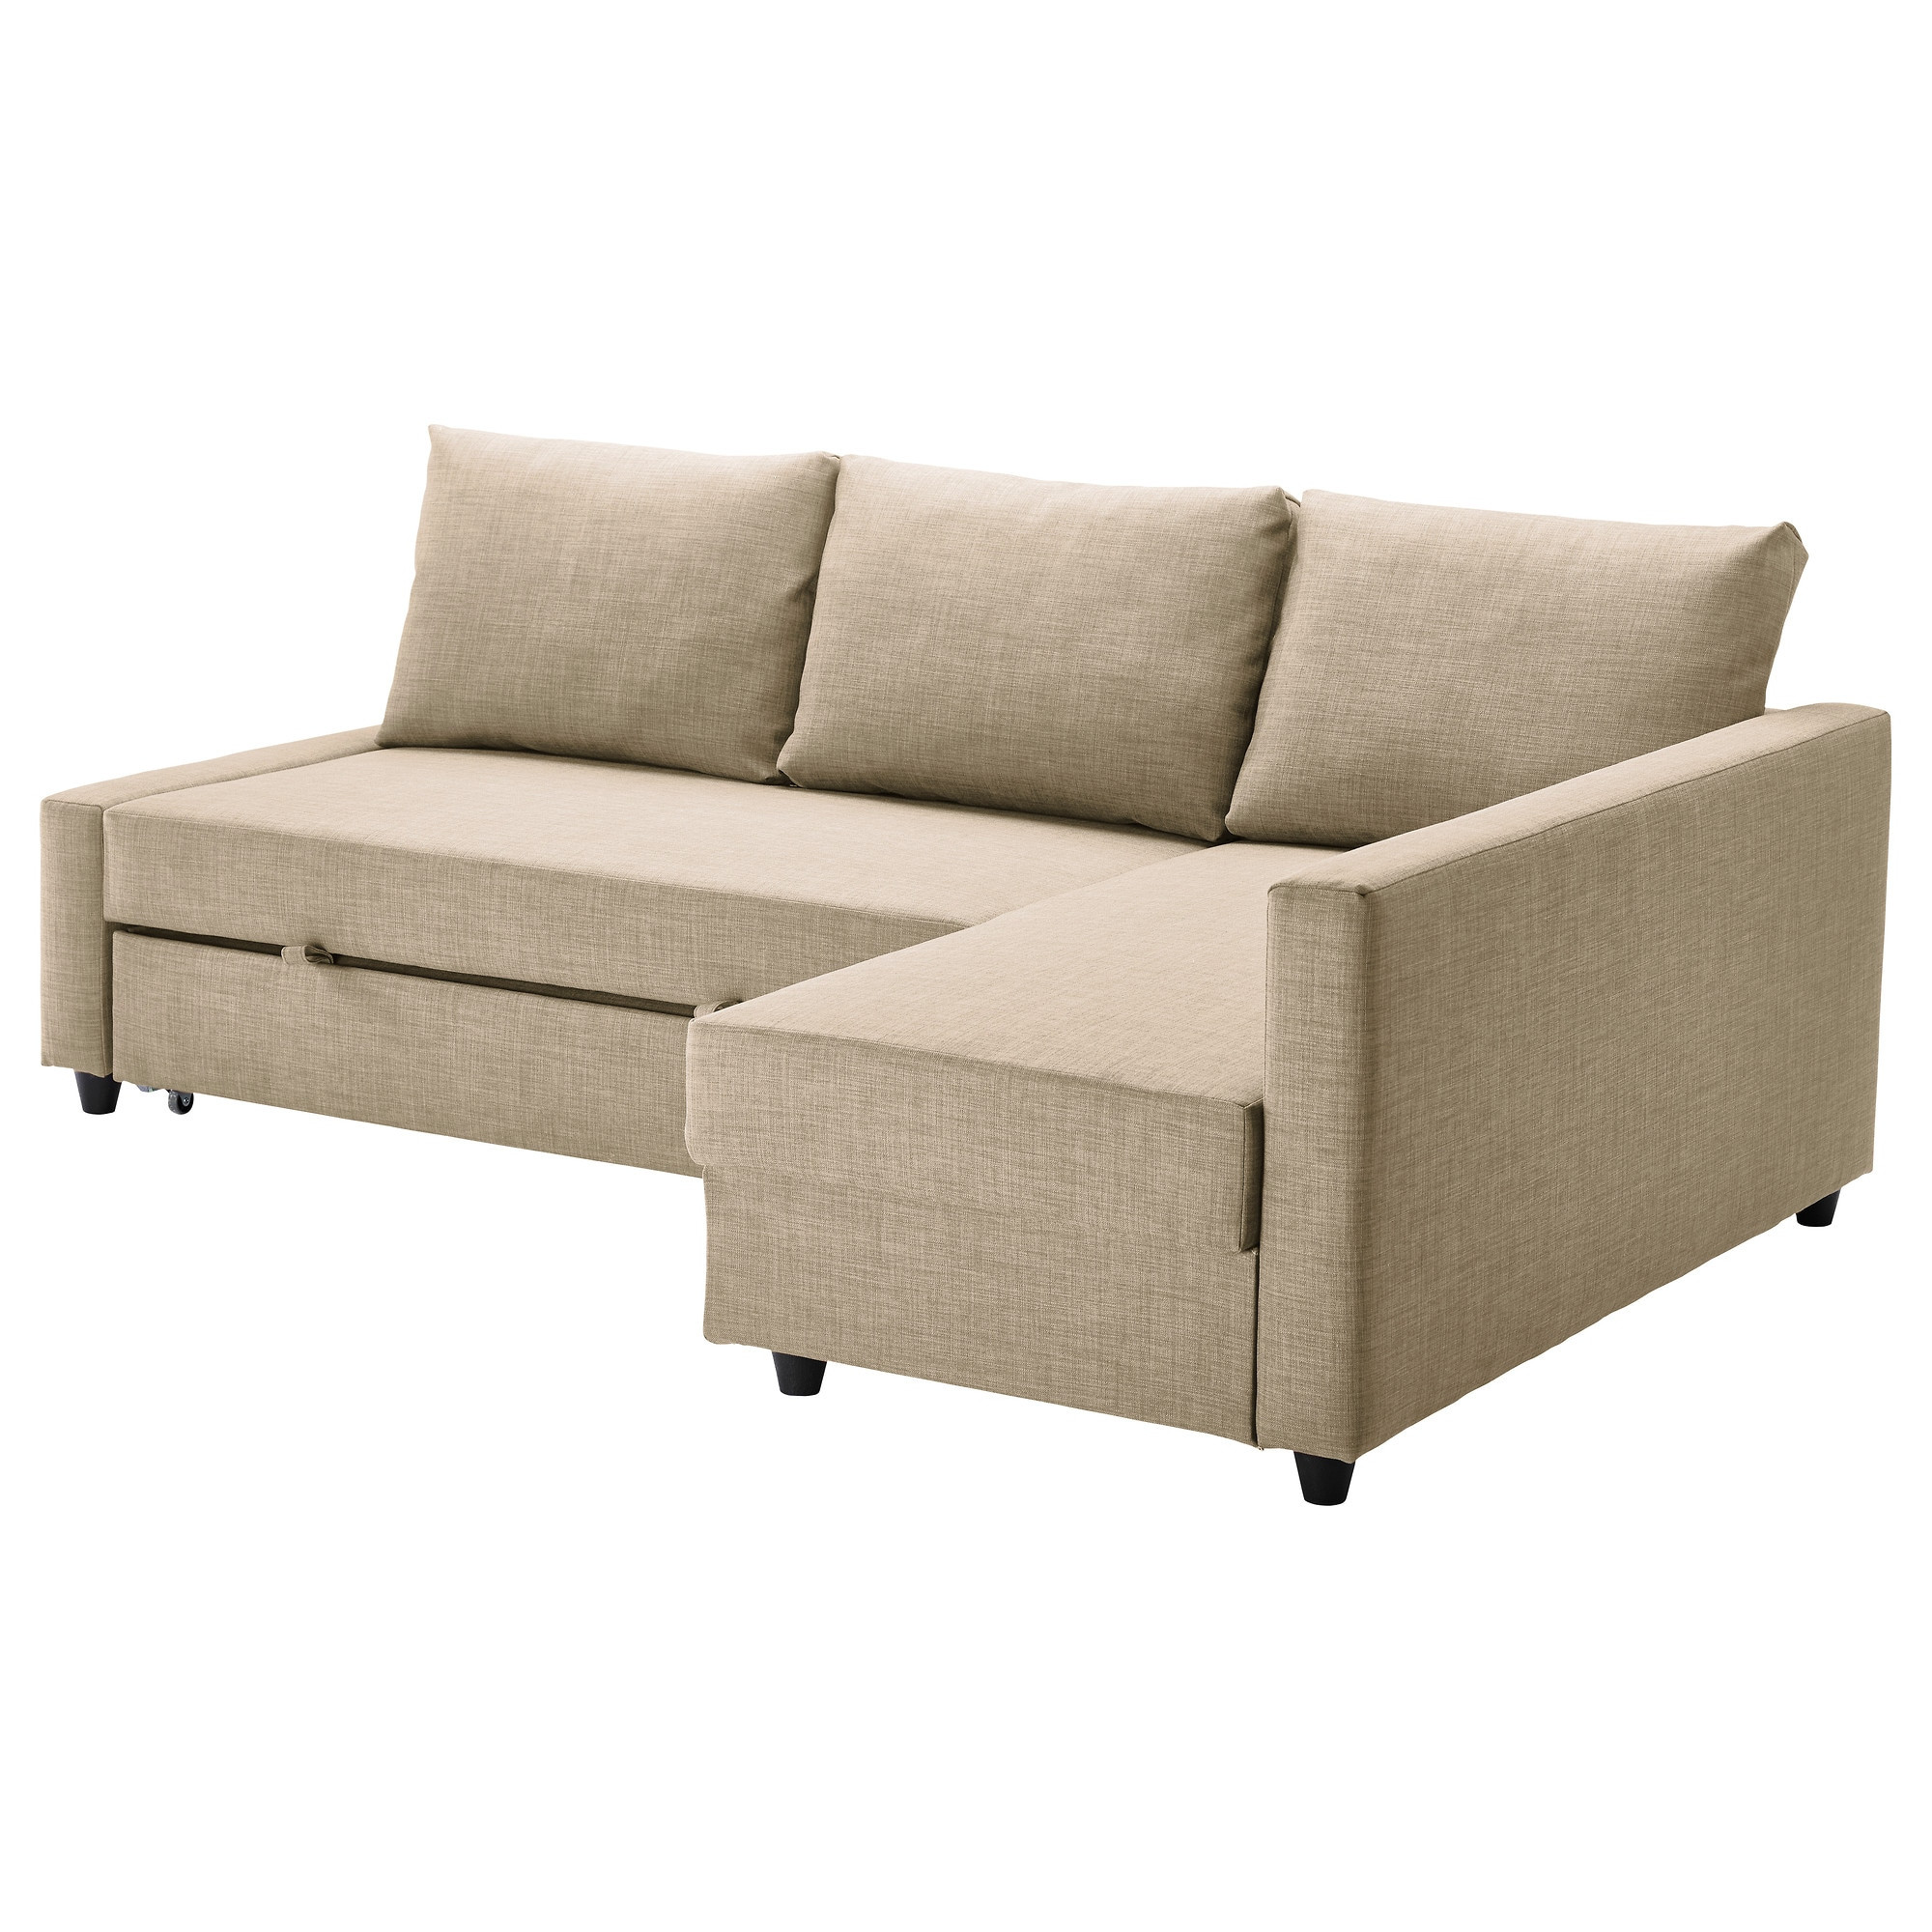 Best ideas about Sleeper Sofa Ikea
. Save or Pin FRIHETEN Corner sofa bed with storage Skiftebo beige IKEA Now.